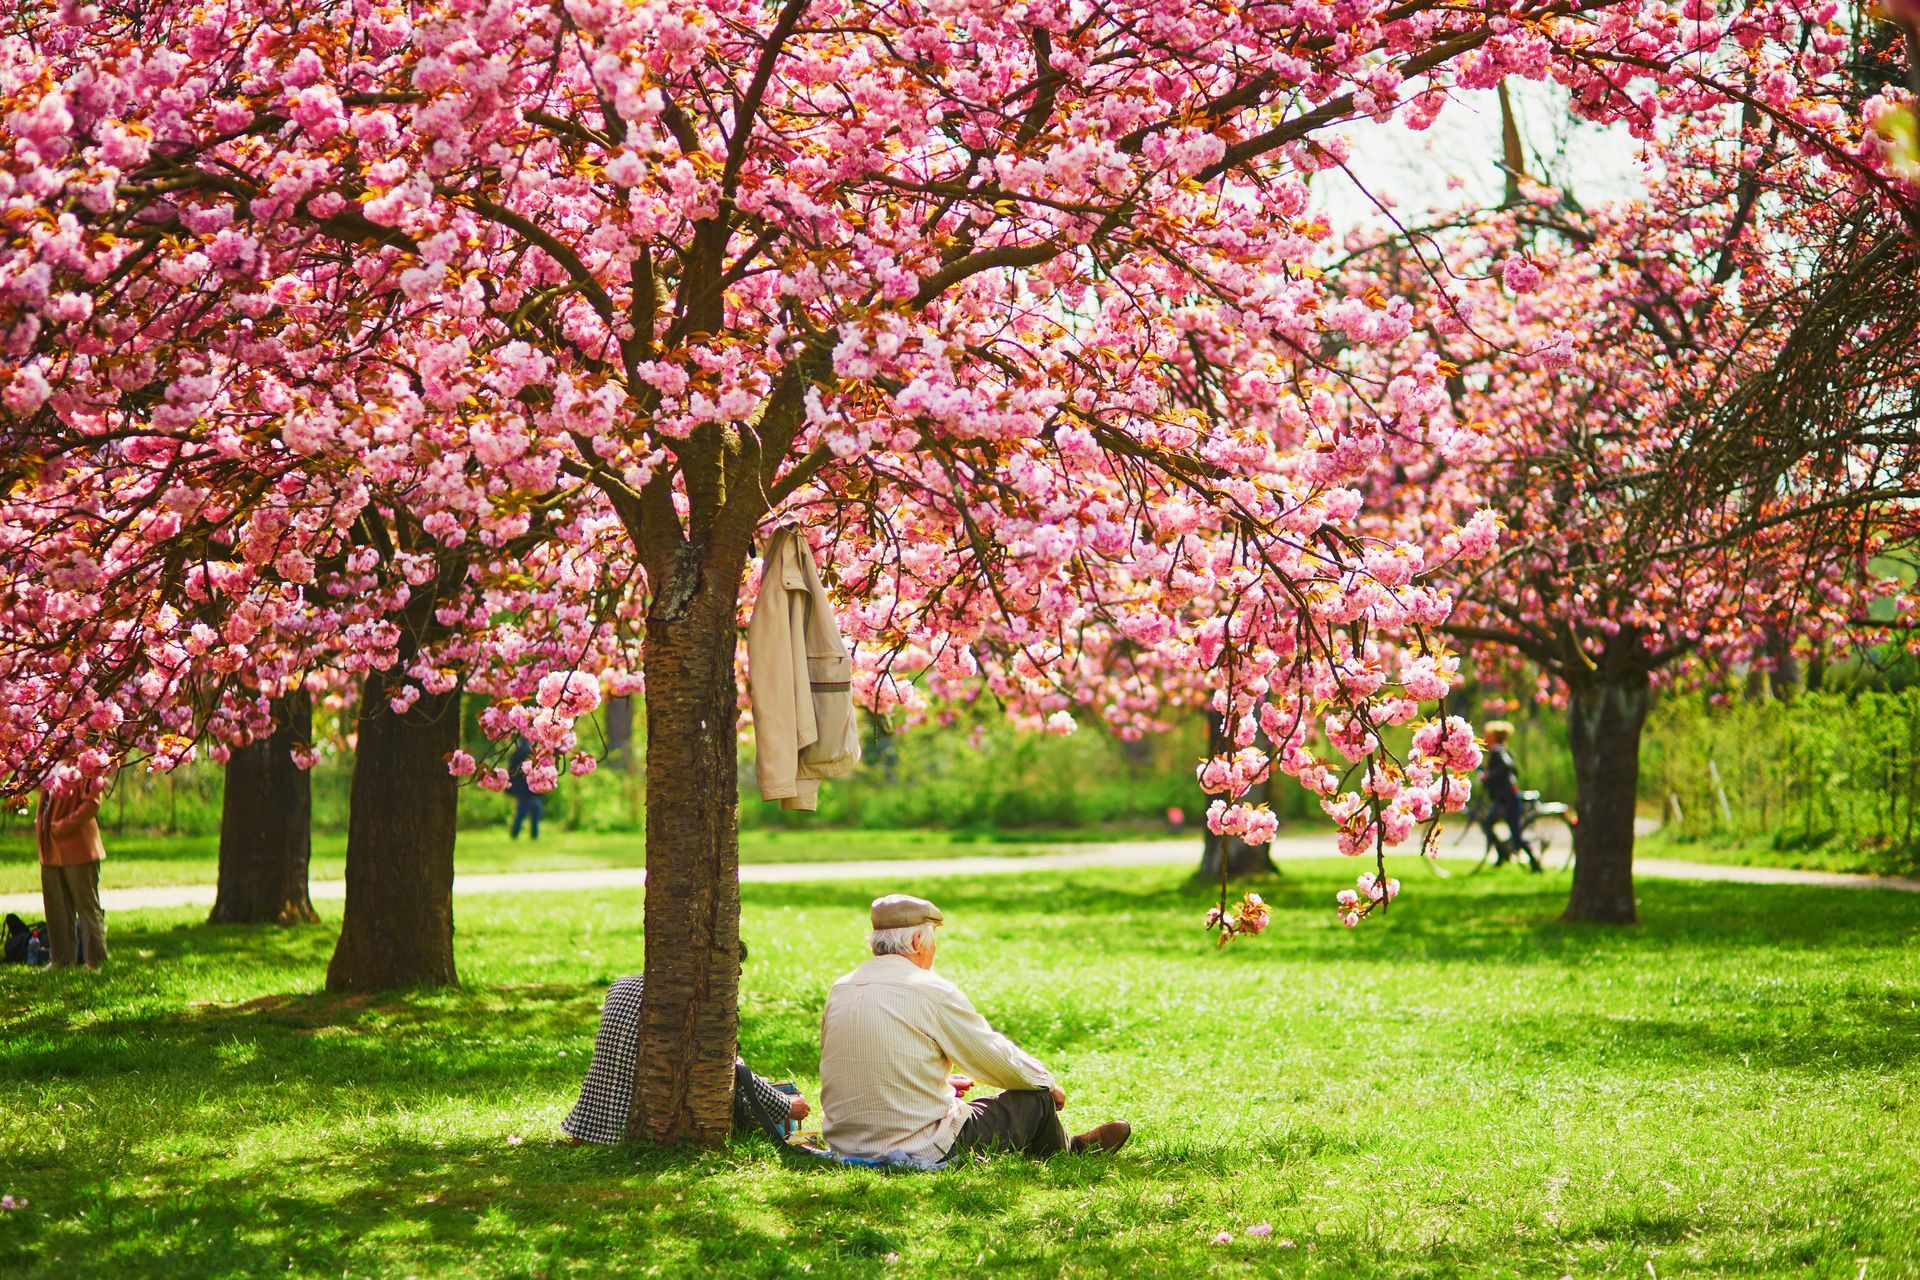 seniors enjoying spring time weather at a park